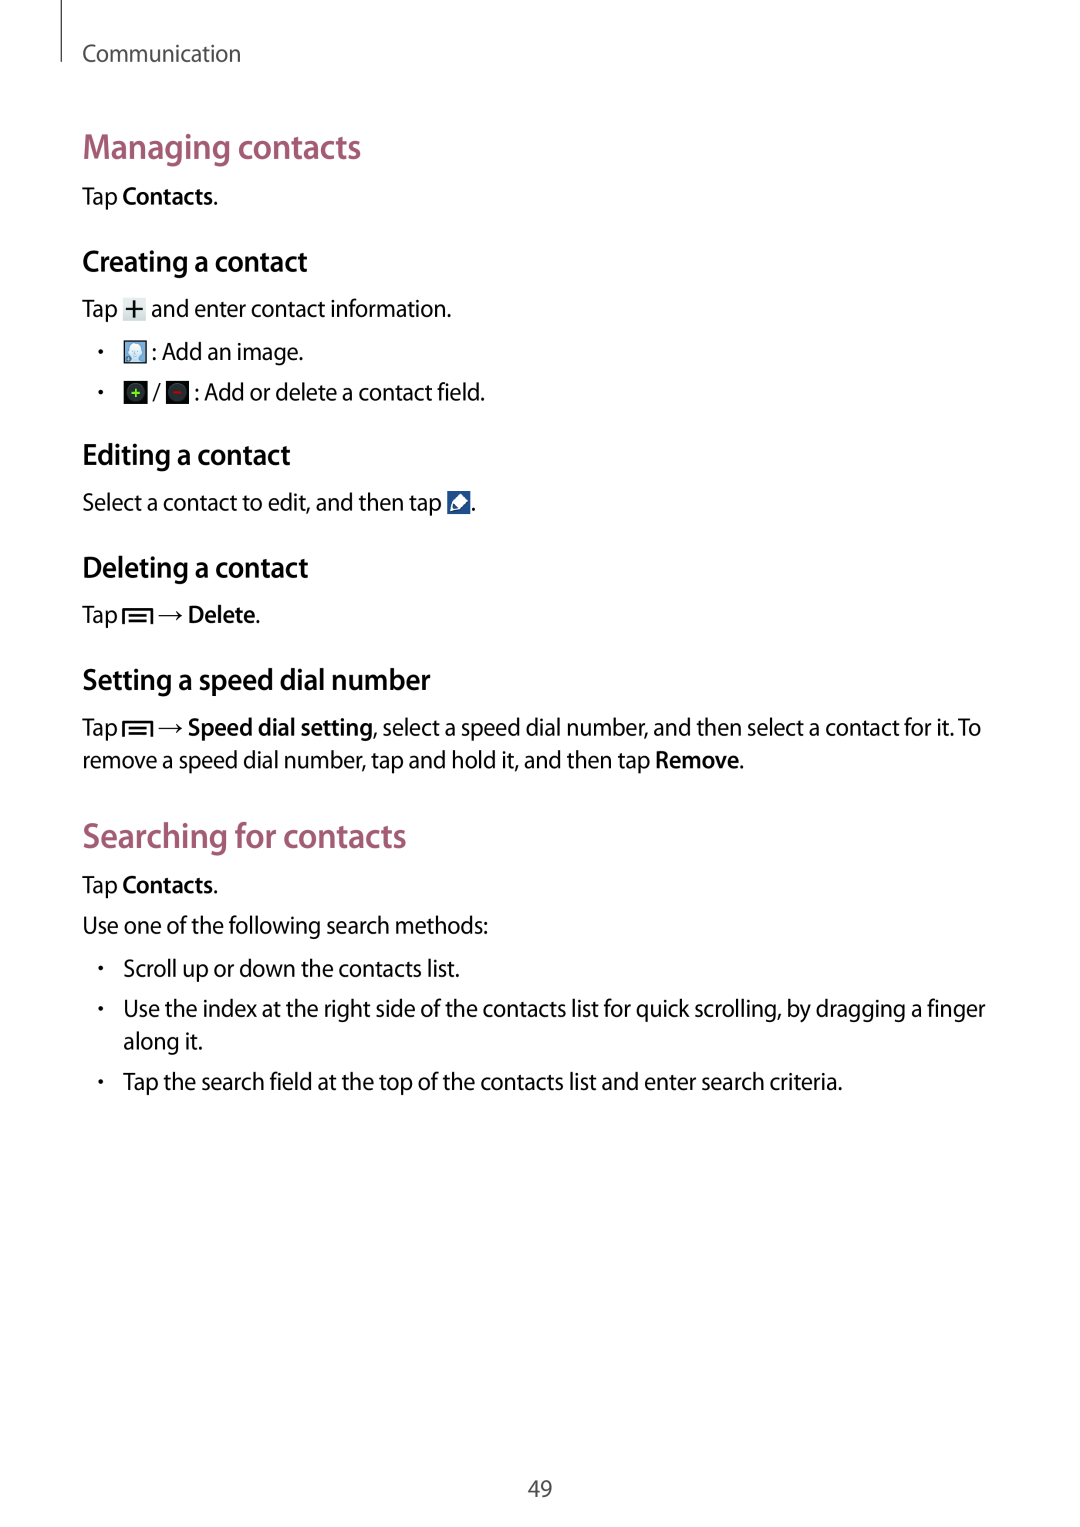 Samsung GT-I8200RWNETL Managing contacts, Searching for contacts, Creating a contact, Editing a contact, Tap Contacts 